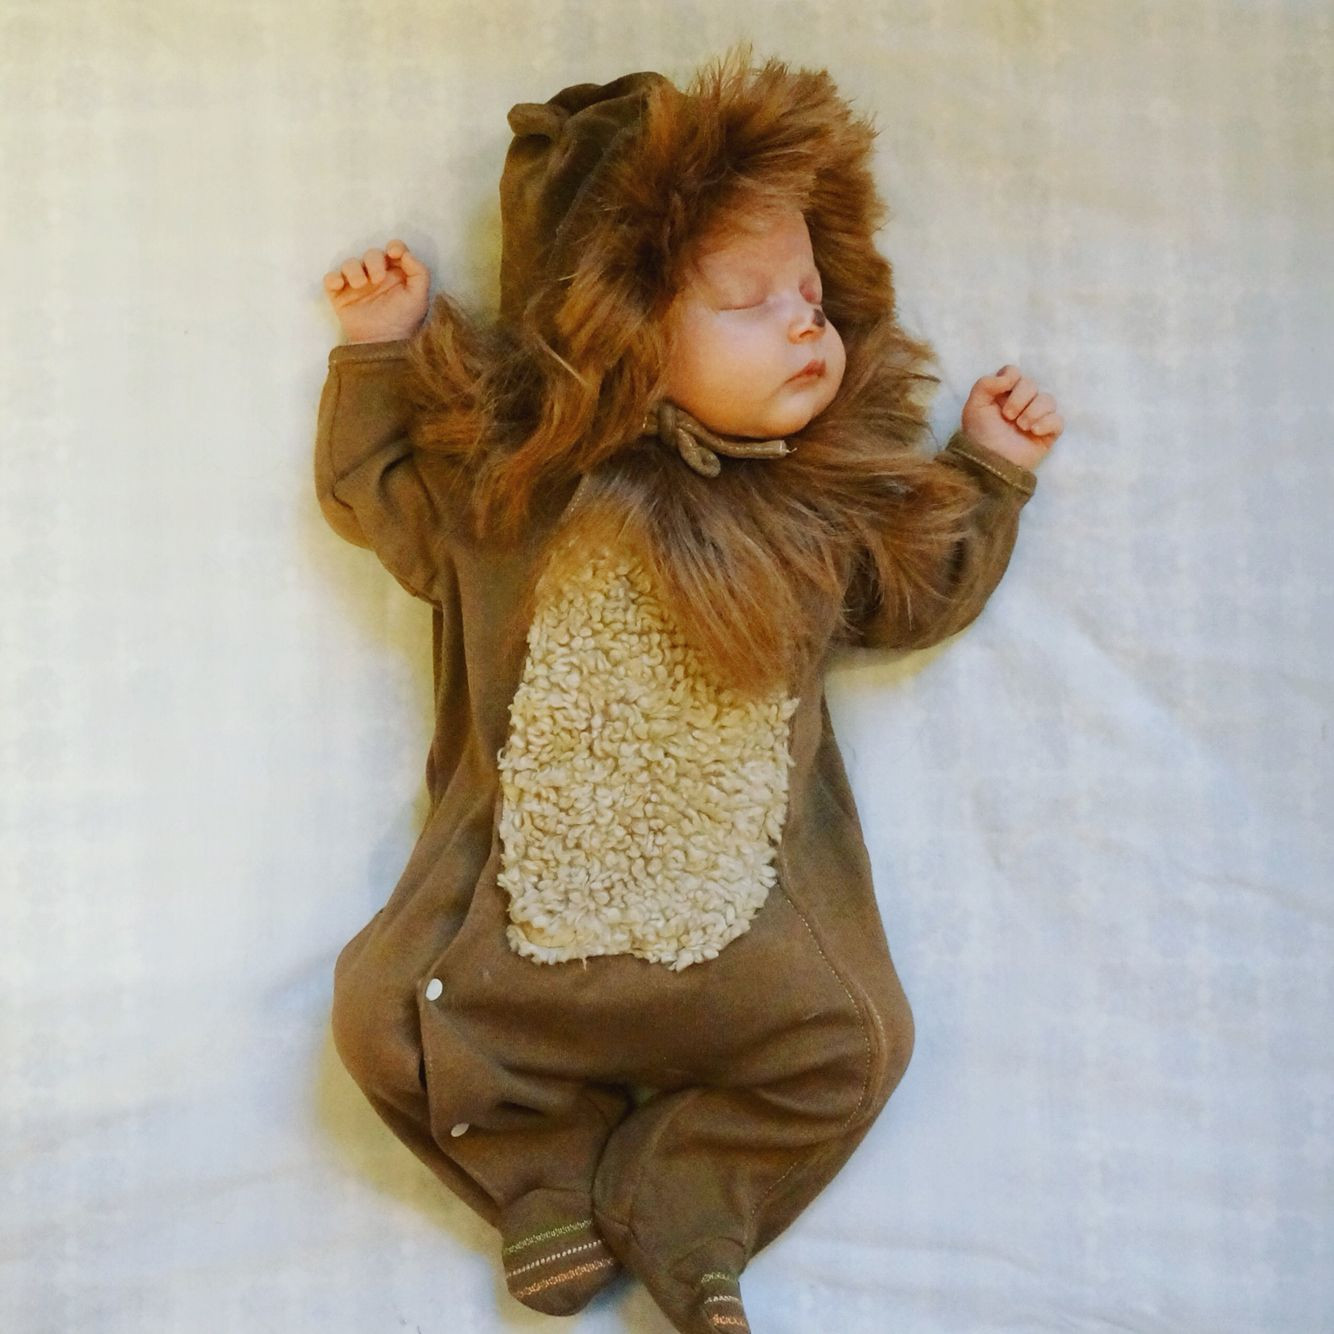 DIY Lion Costume For Toddler
 DIY Newborn baby Halloween costume Wizard of Oz lion